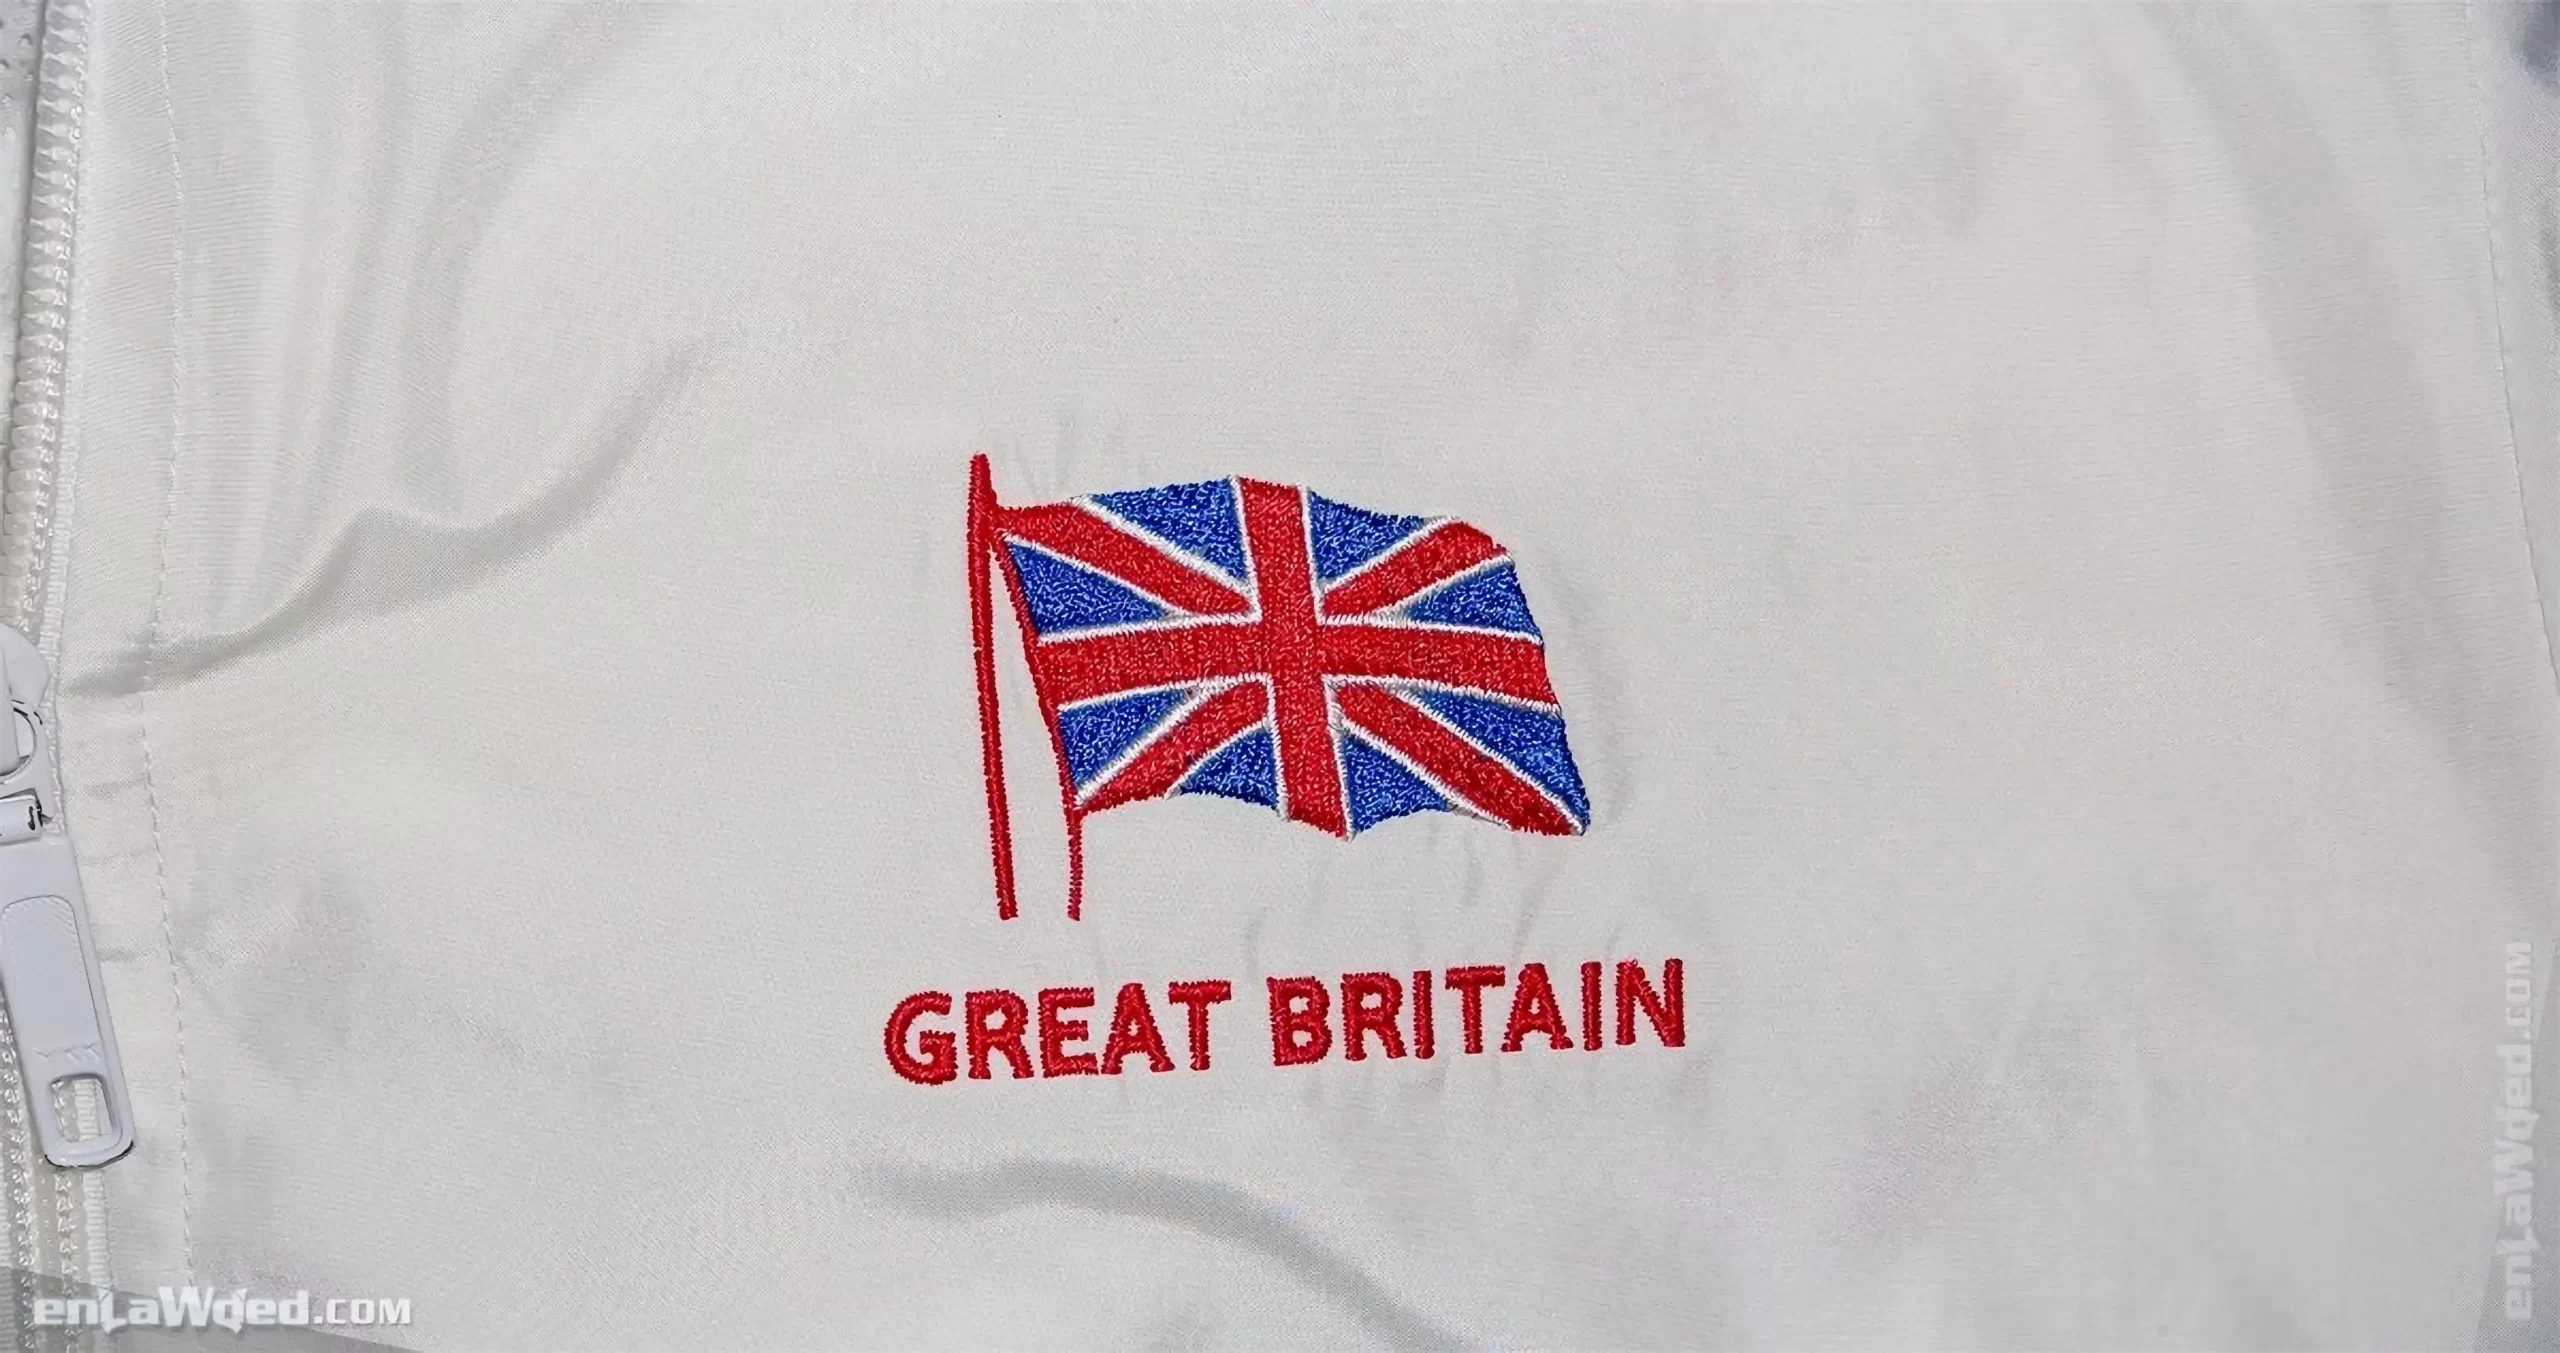 Men’s 2005 Great Britain Olympic ’84 TT by Adidas: Supported (EnLawded.com file #lmcemj626kfm6ccm4ek)